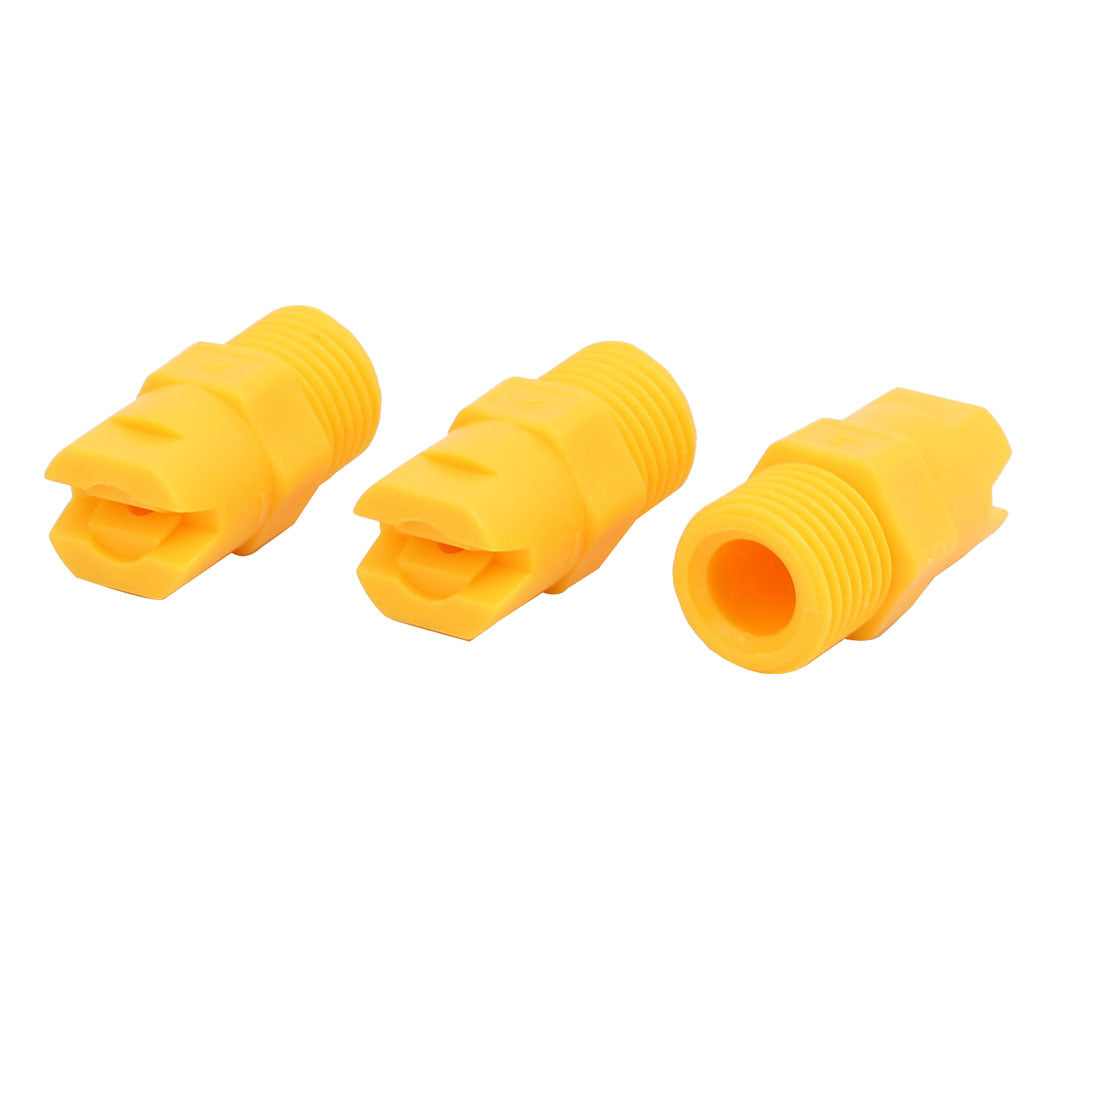 uxcell Uxcell 1/4PT Male Thread 80 Degree PP Standard Veejet Flat Fan Spray Tip Yellow 3pcs